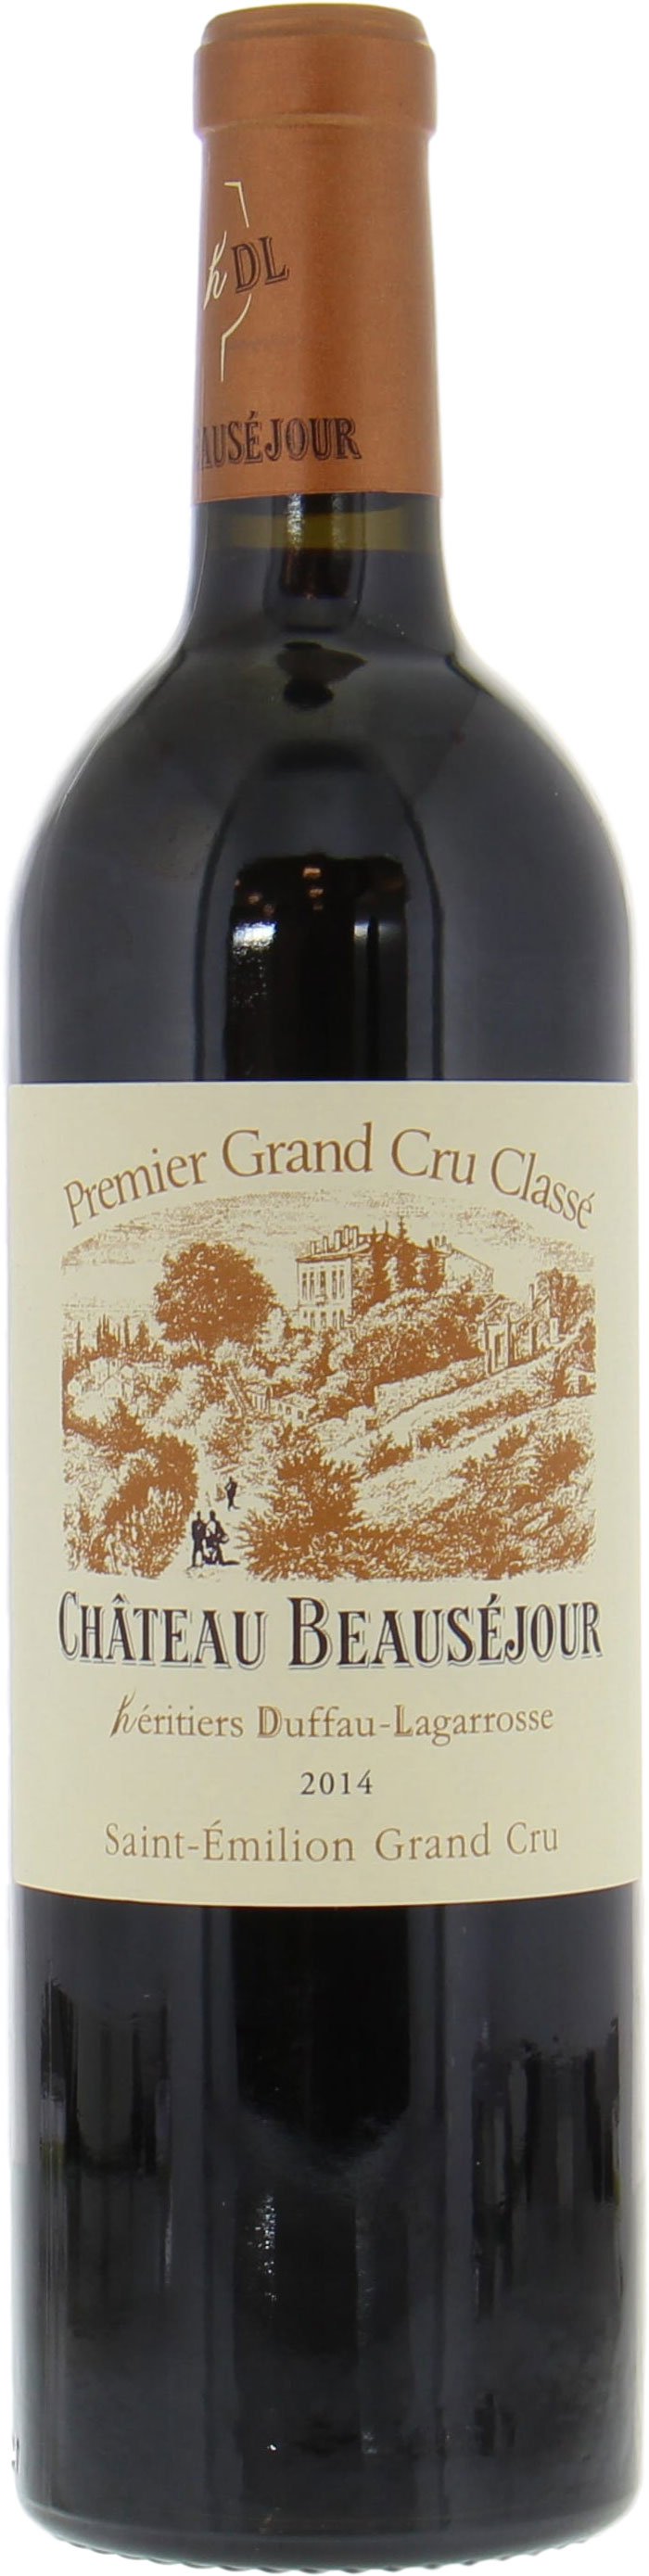 Chateau Beausejour Duffau Lagarrosse 2014 | Buy Online | Best of Wines